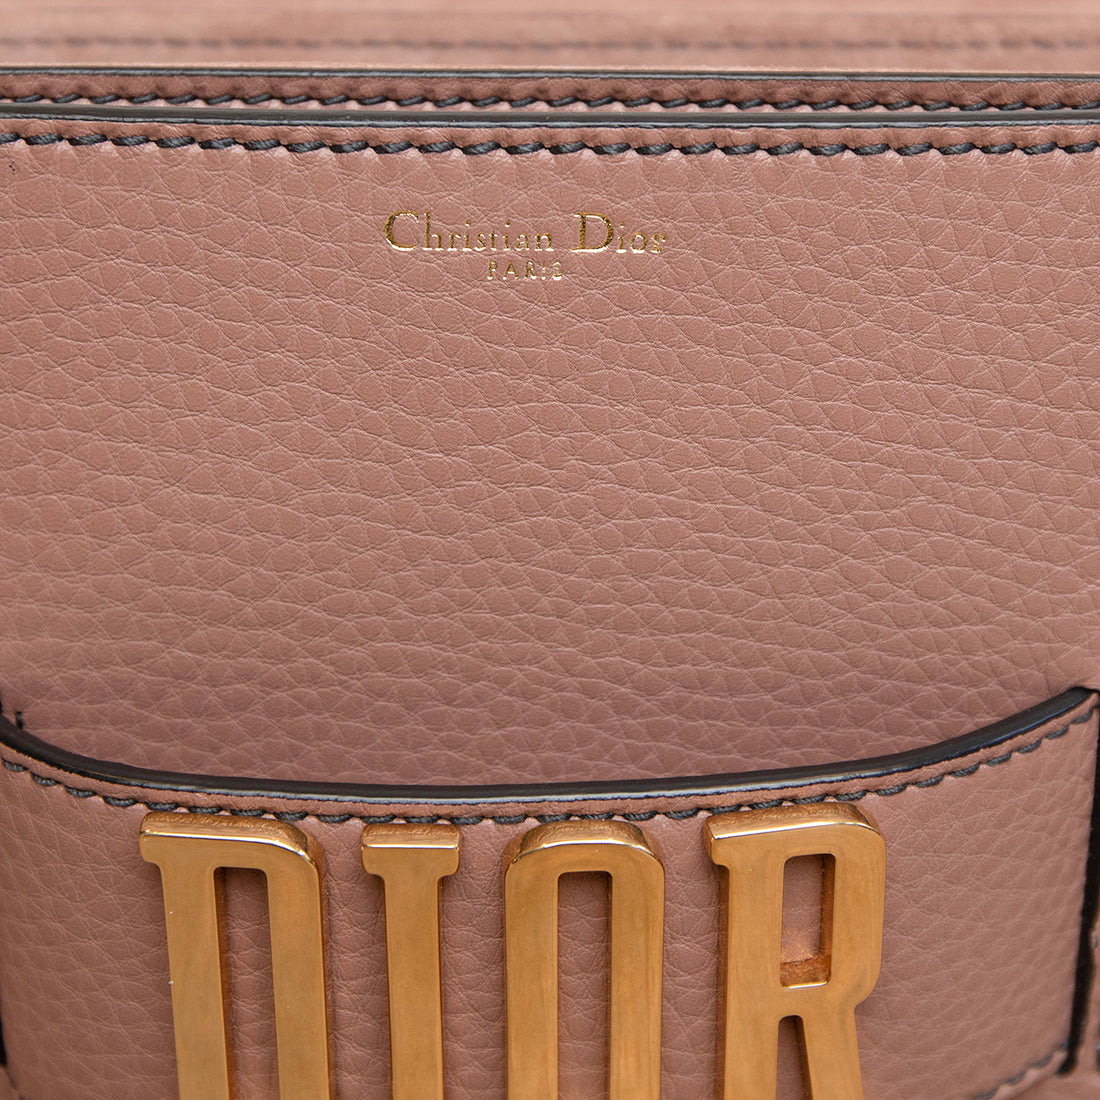 Christian Dior Dio(r)evolution Flap Bag FW2018